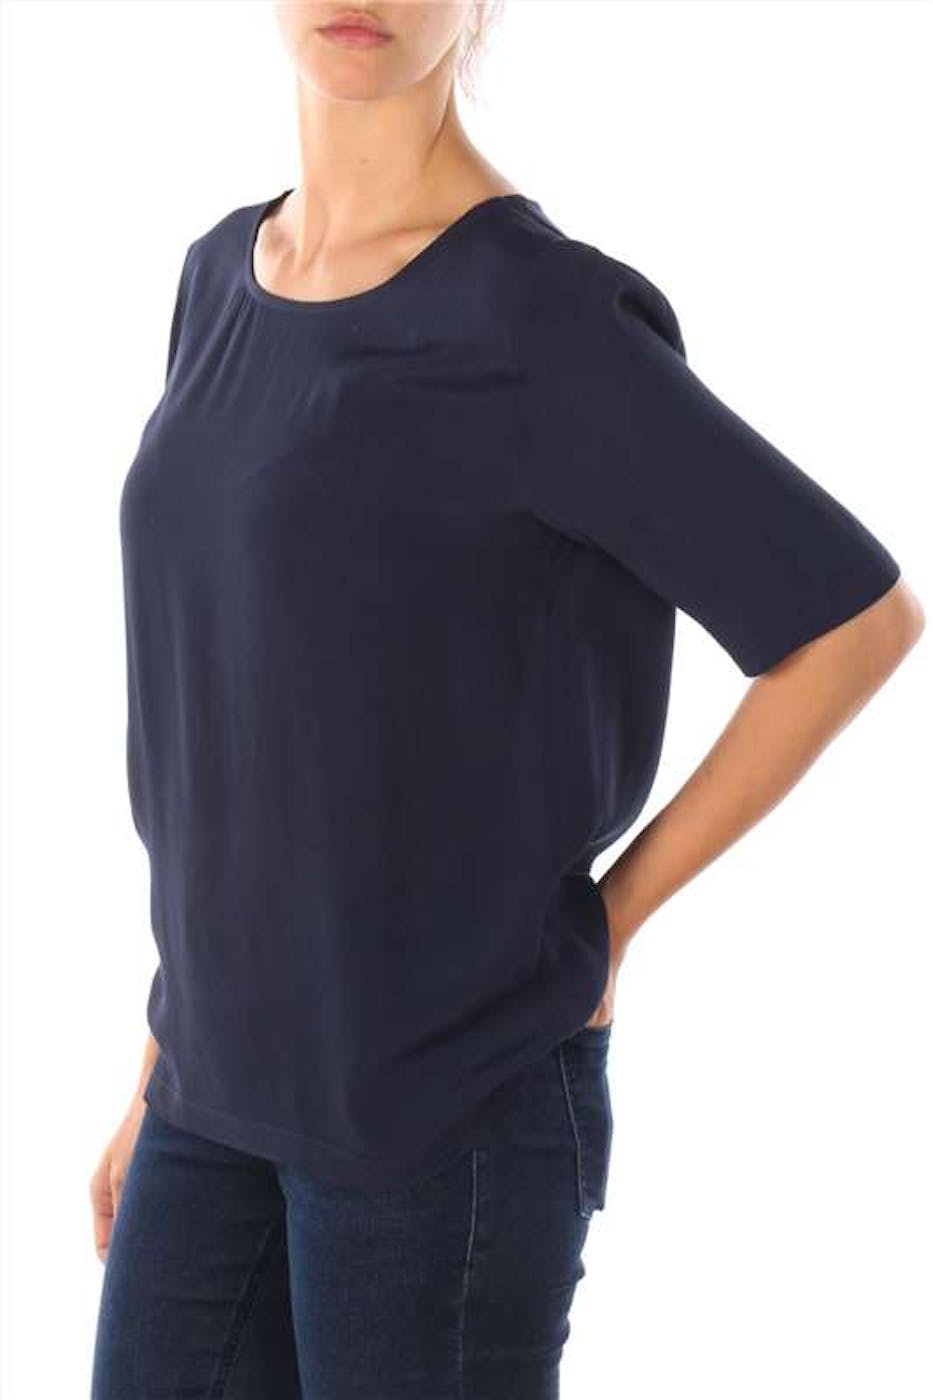 Minimum - Donkerblauwe Elvire blouse met 1/2 mouw